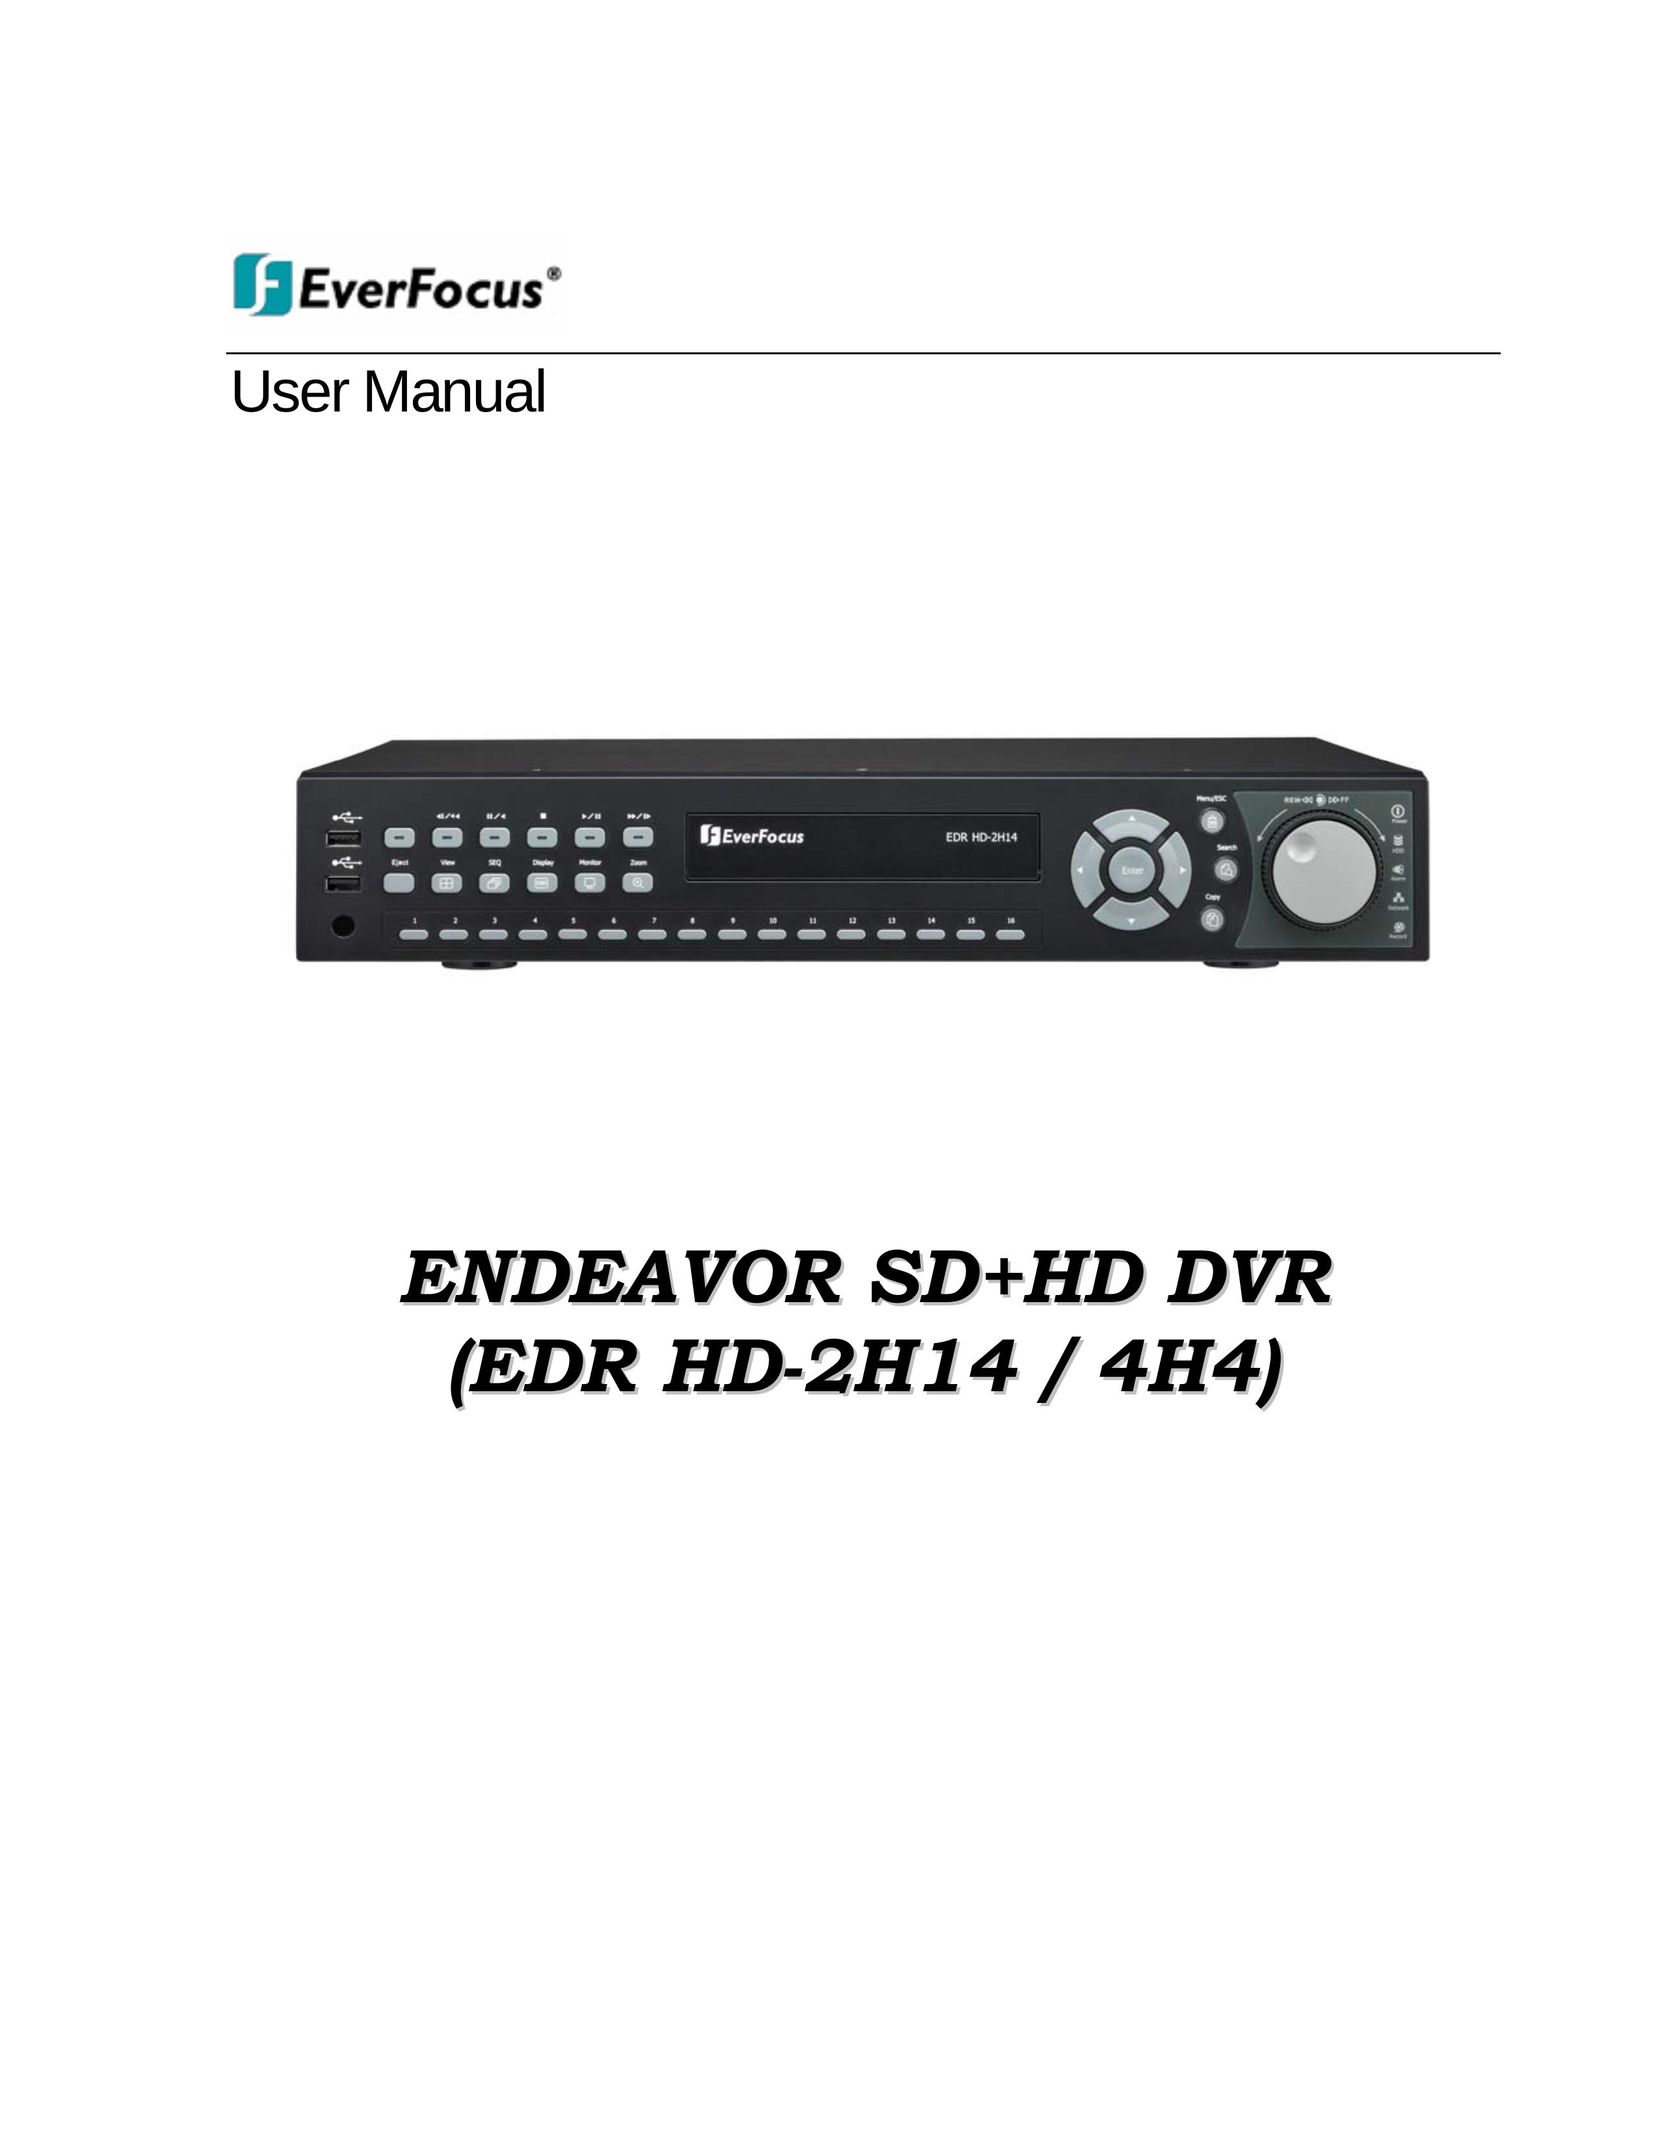 EverFocus 22HH1144 DVR User Manual